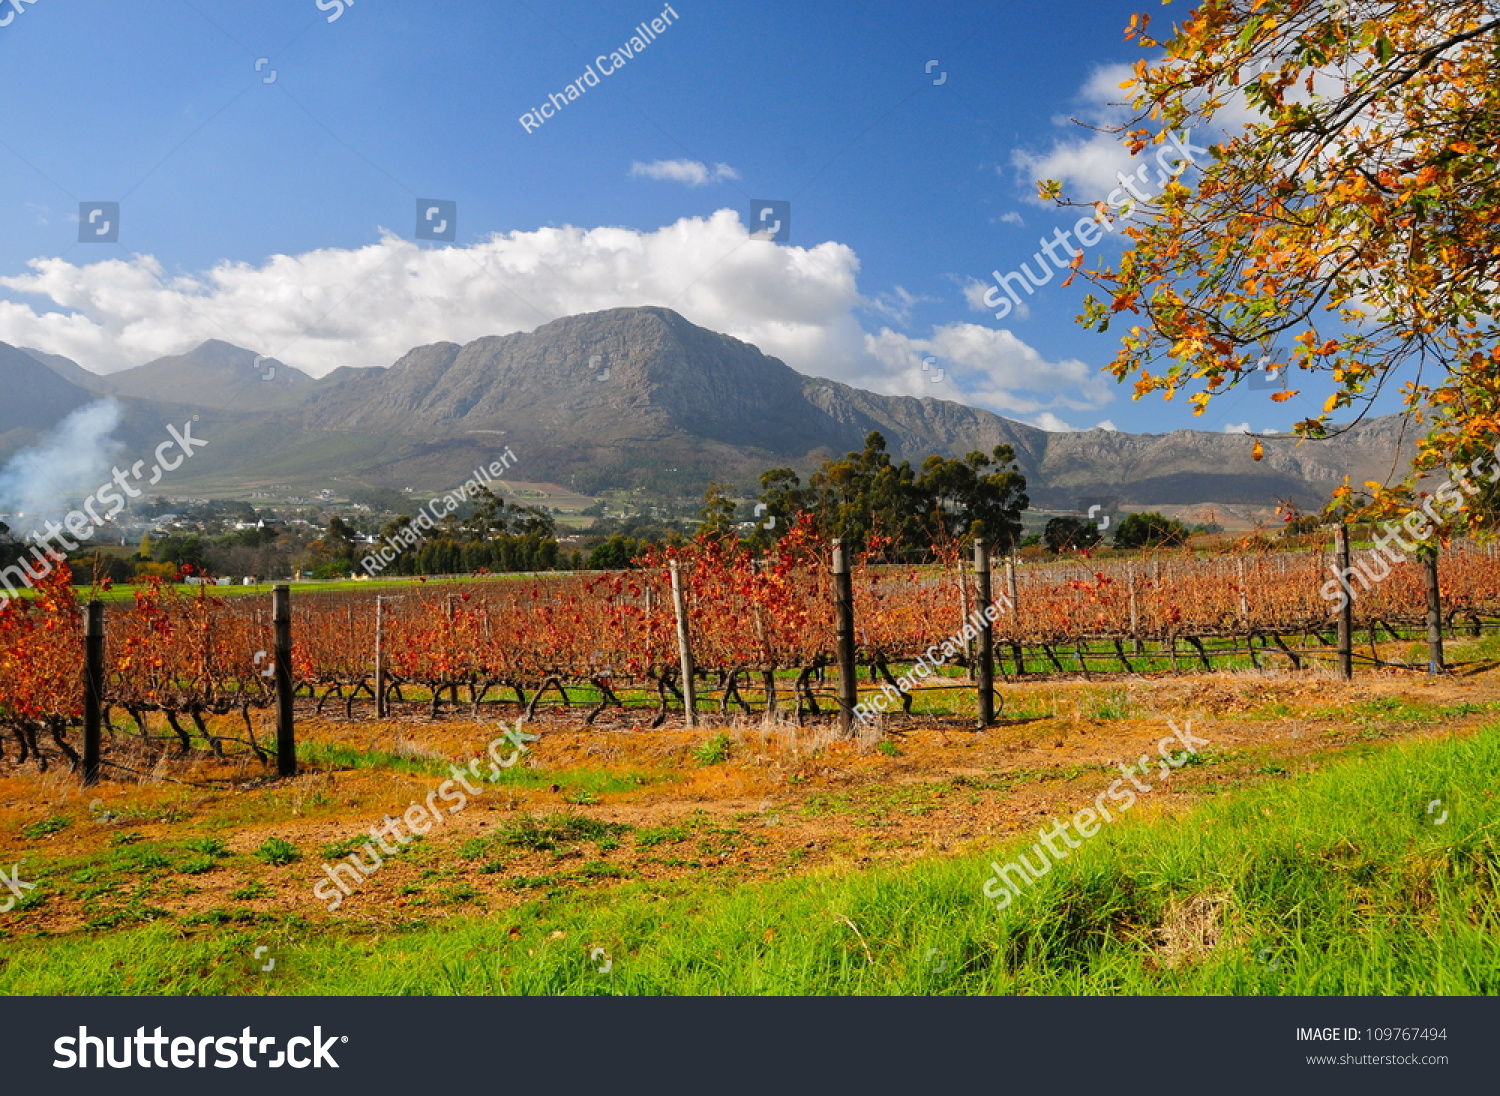 Franschhoek wineland area, South Africa #109767494